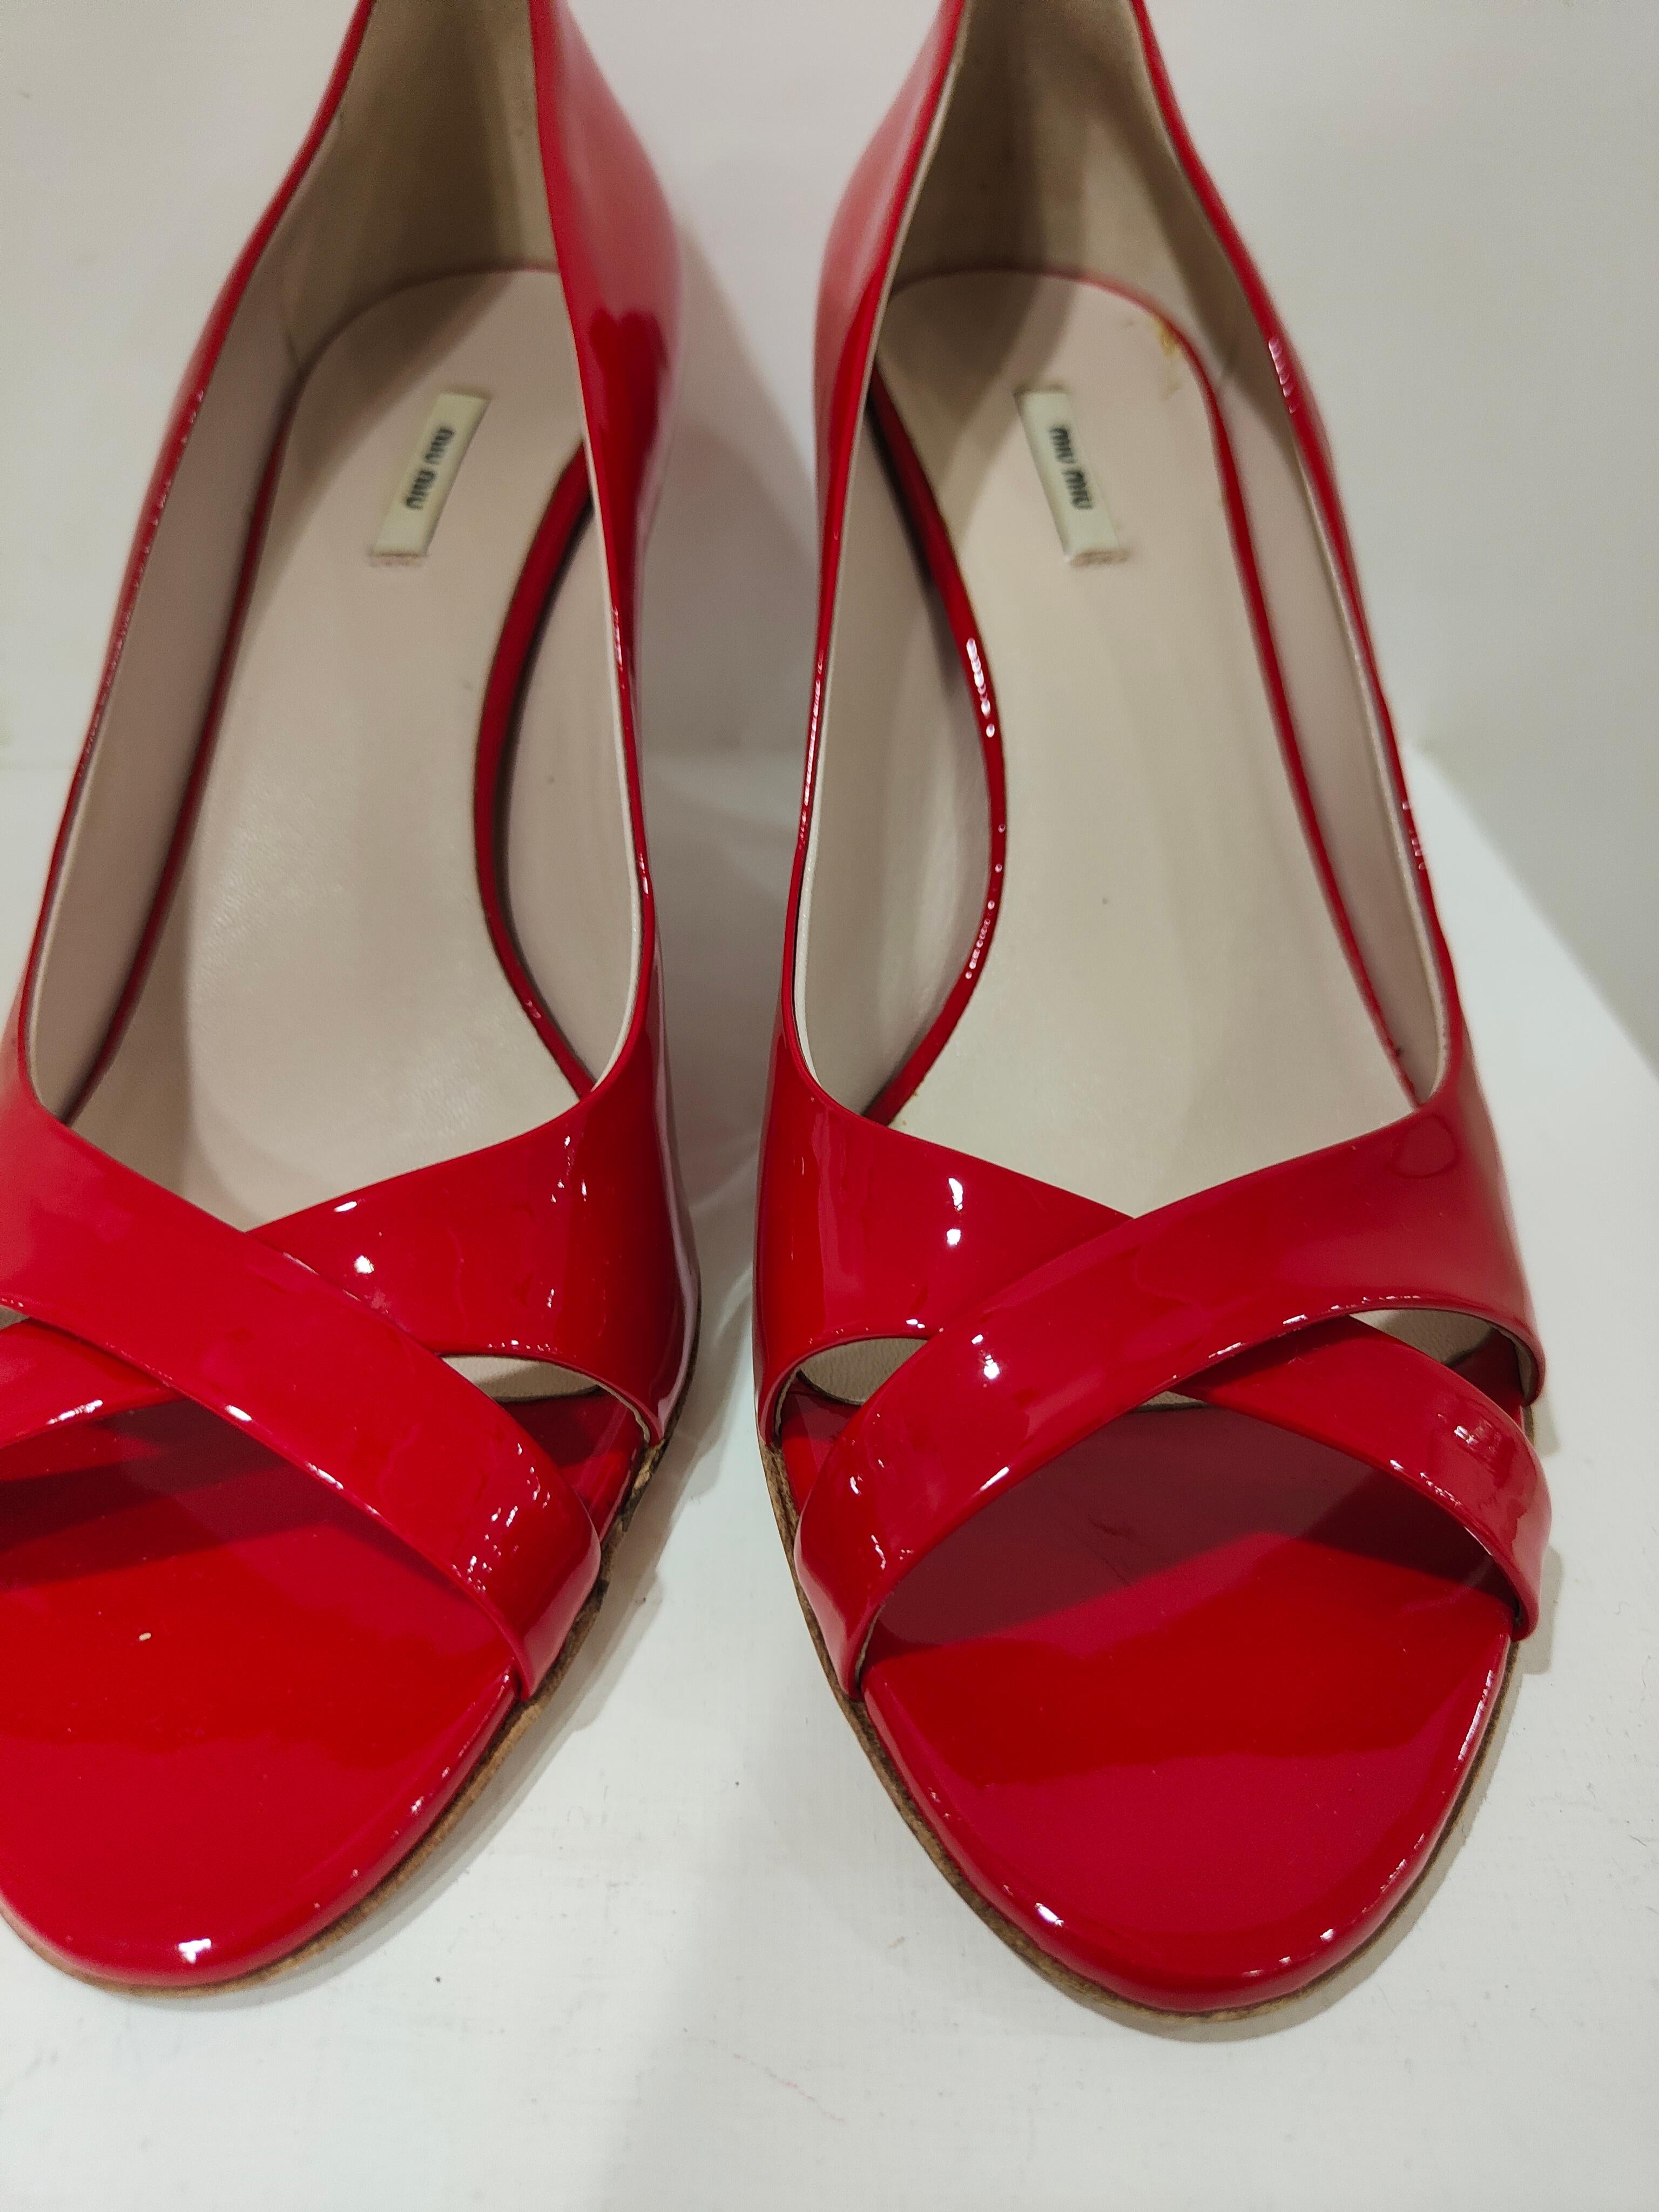 Miu Miu red patent leather decollete In Good Condition For Sale In Capri, IT